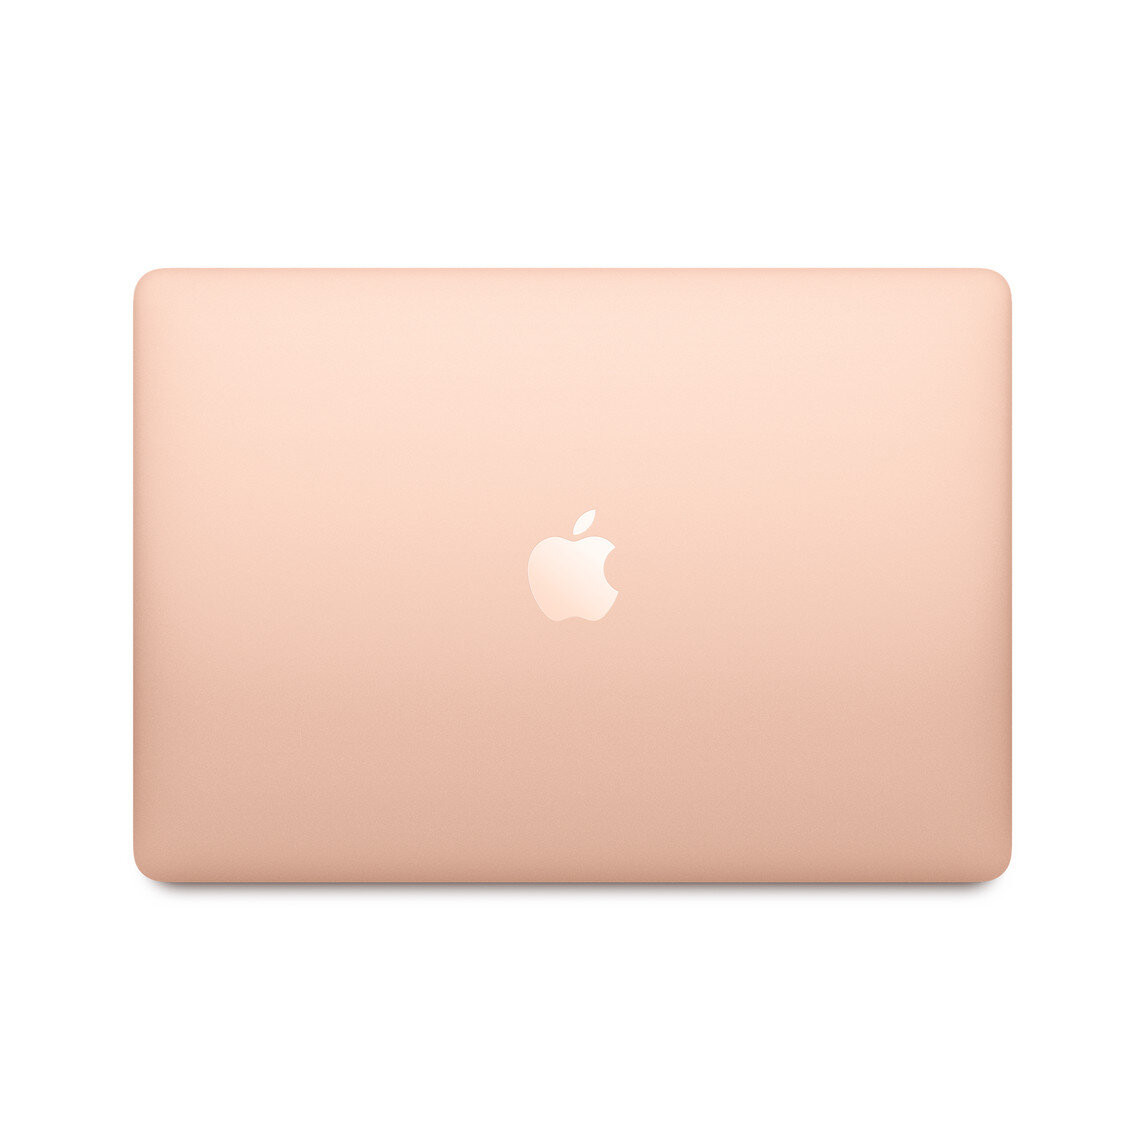 macbook-air-gold-m1-202010_AV1